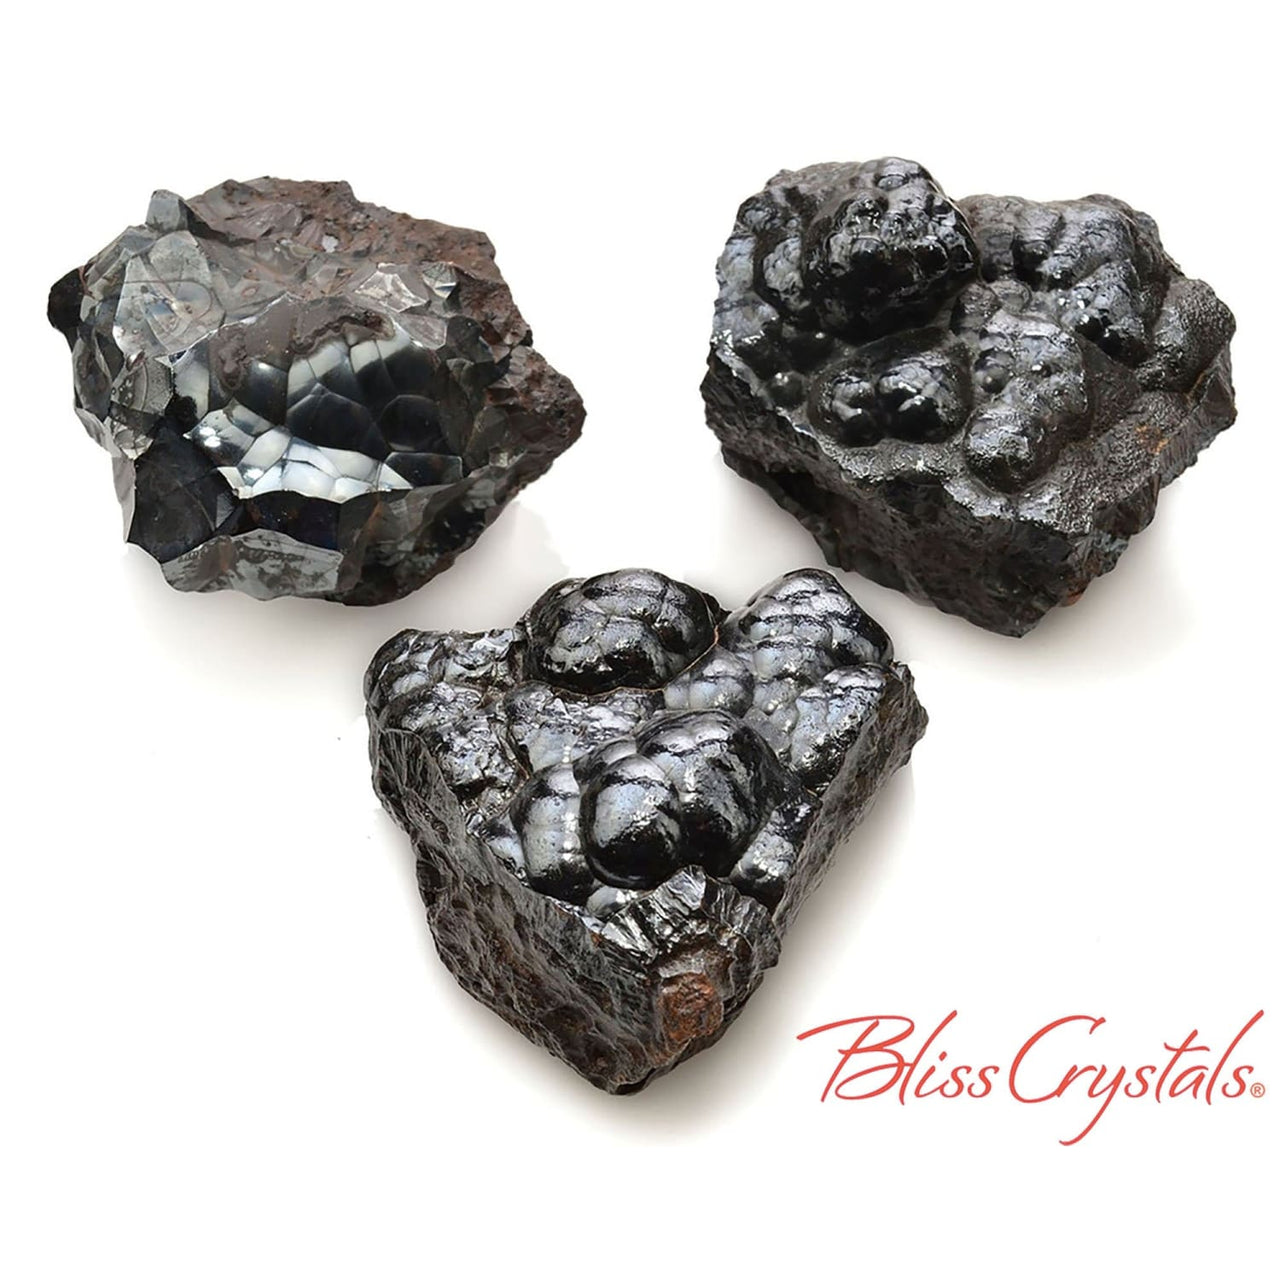 1 XL HEMATITE Rough Stone Metallic Mineral for Grounding 